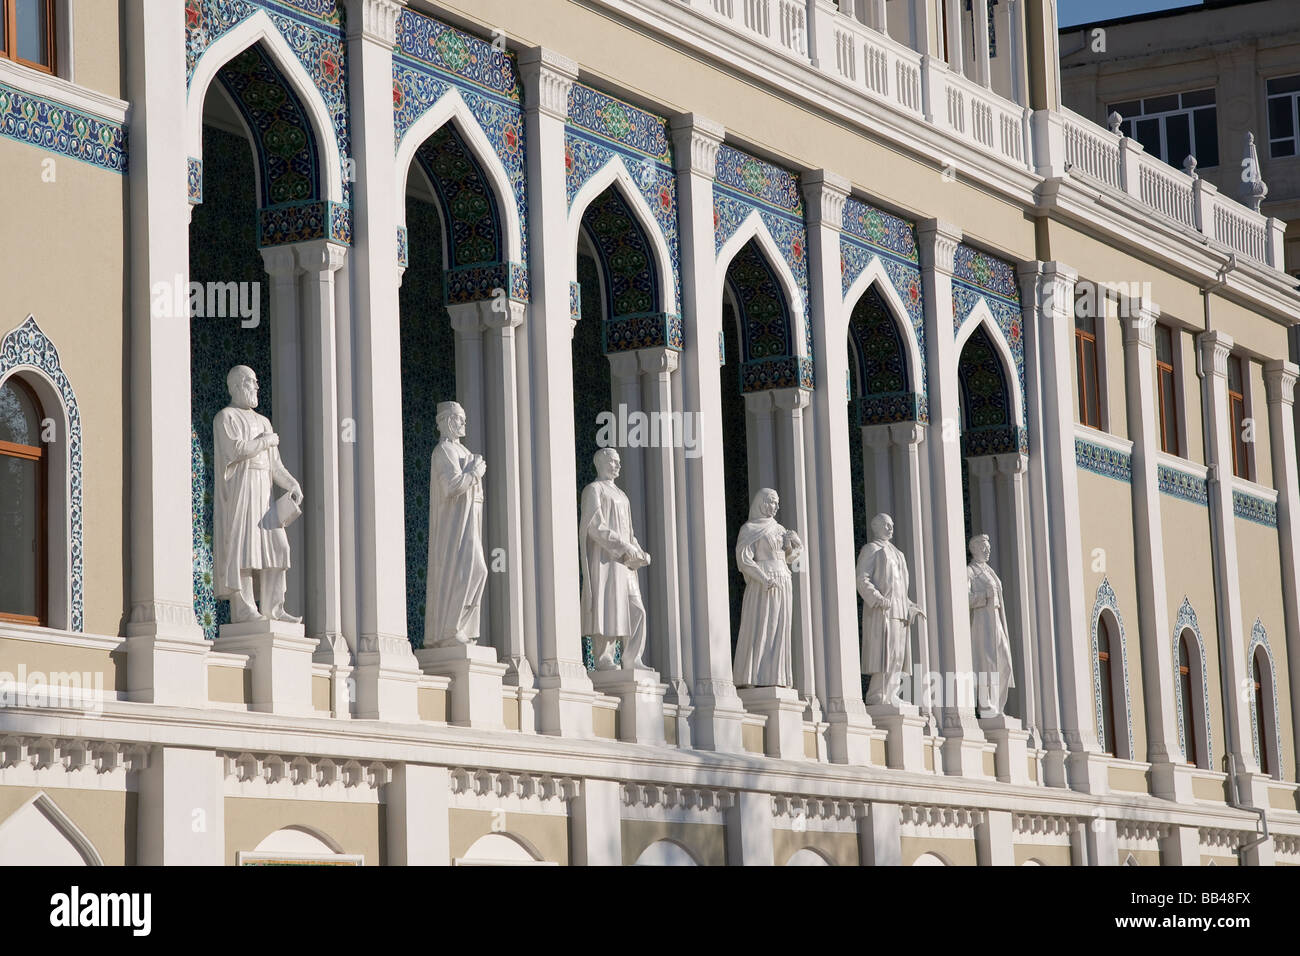 Statues of Azeri writers in Baku Azerbaijan. Stock Photo